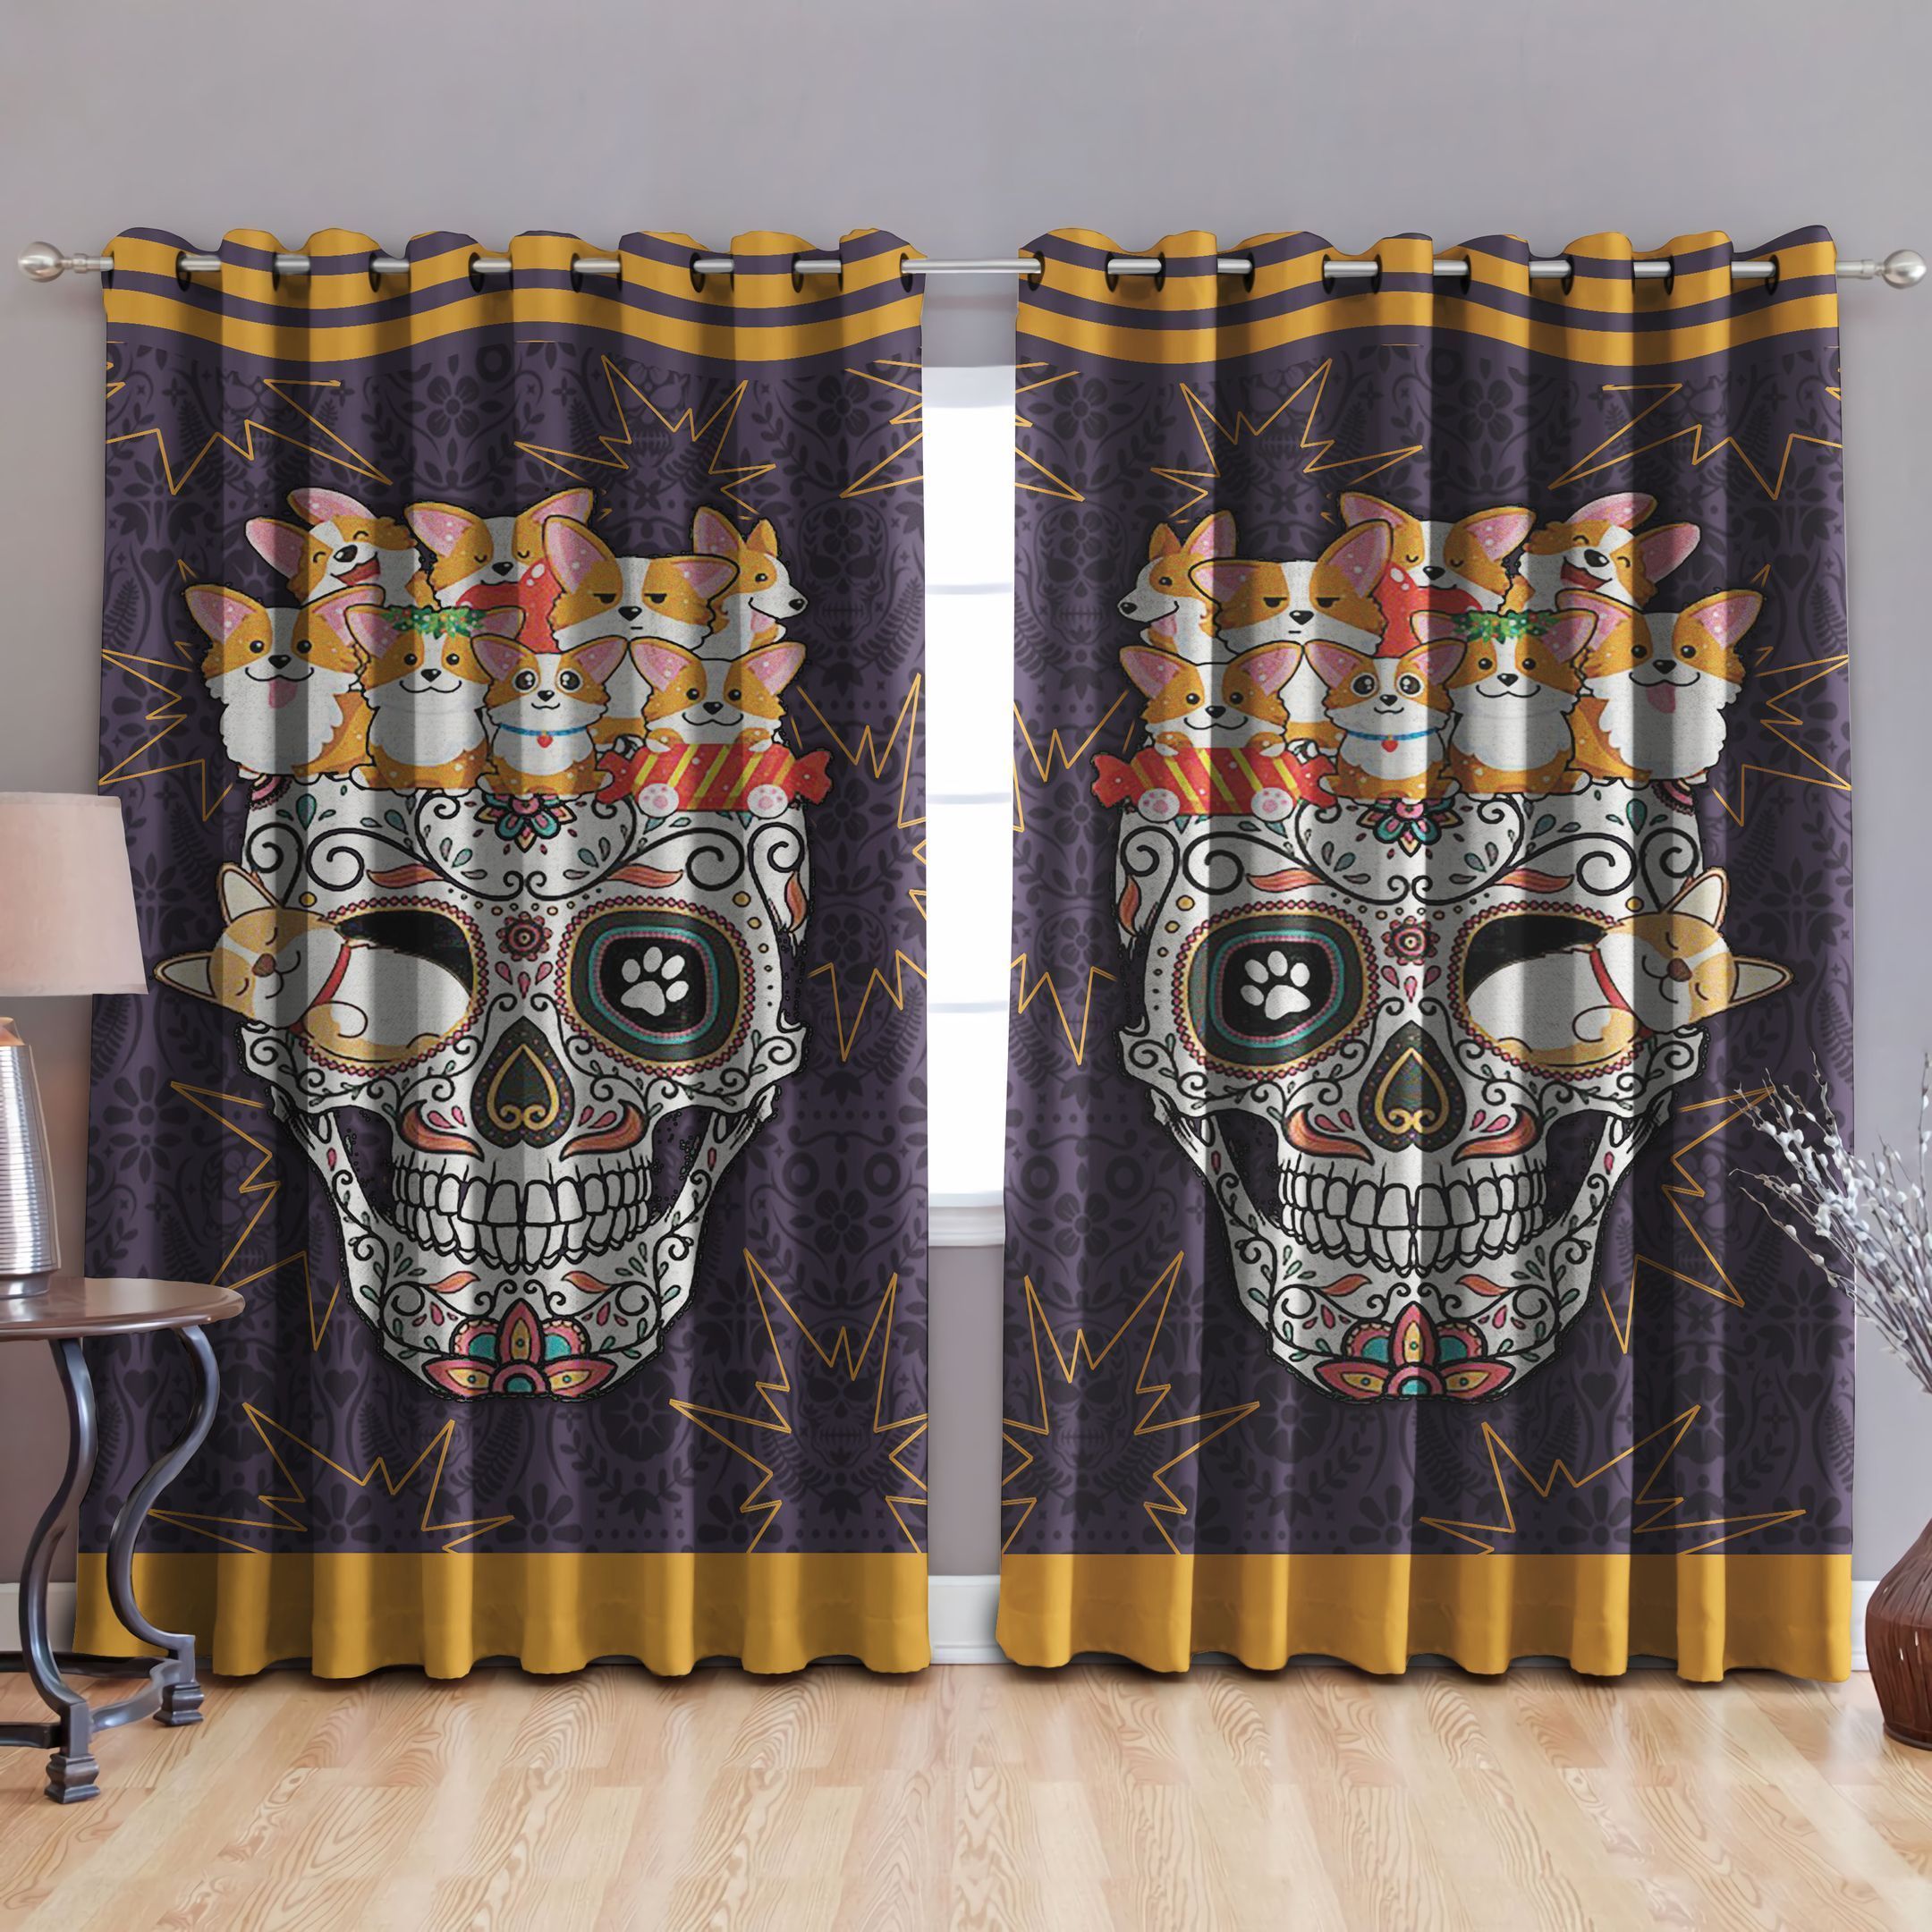 Corgi Sugar Skull Gray And Yellow Printed Window Curtain Home Decor